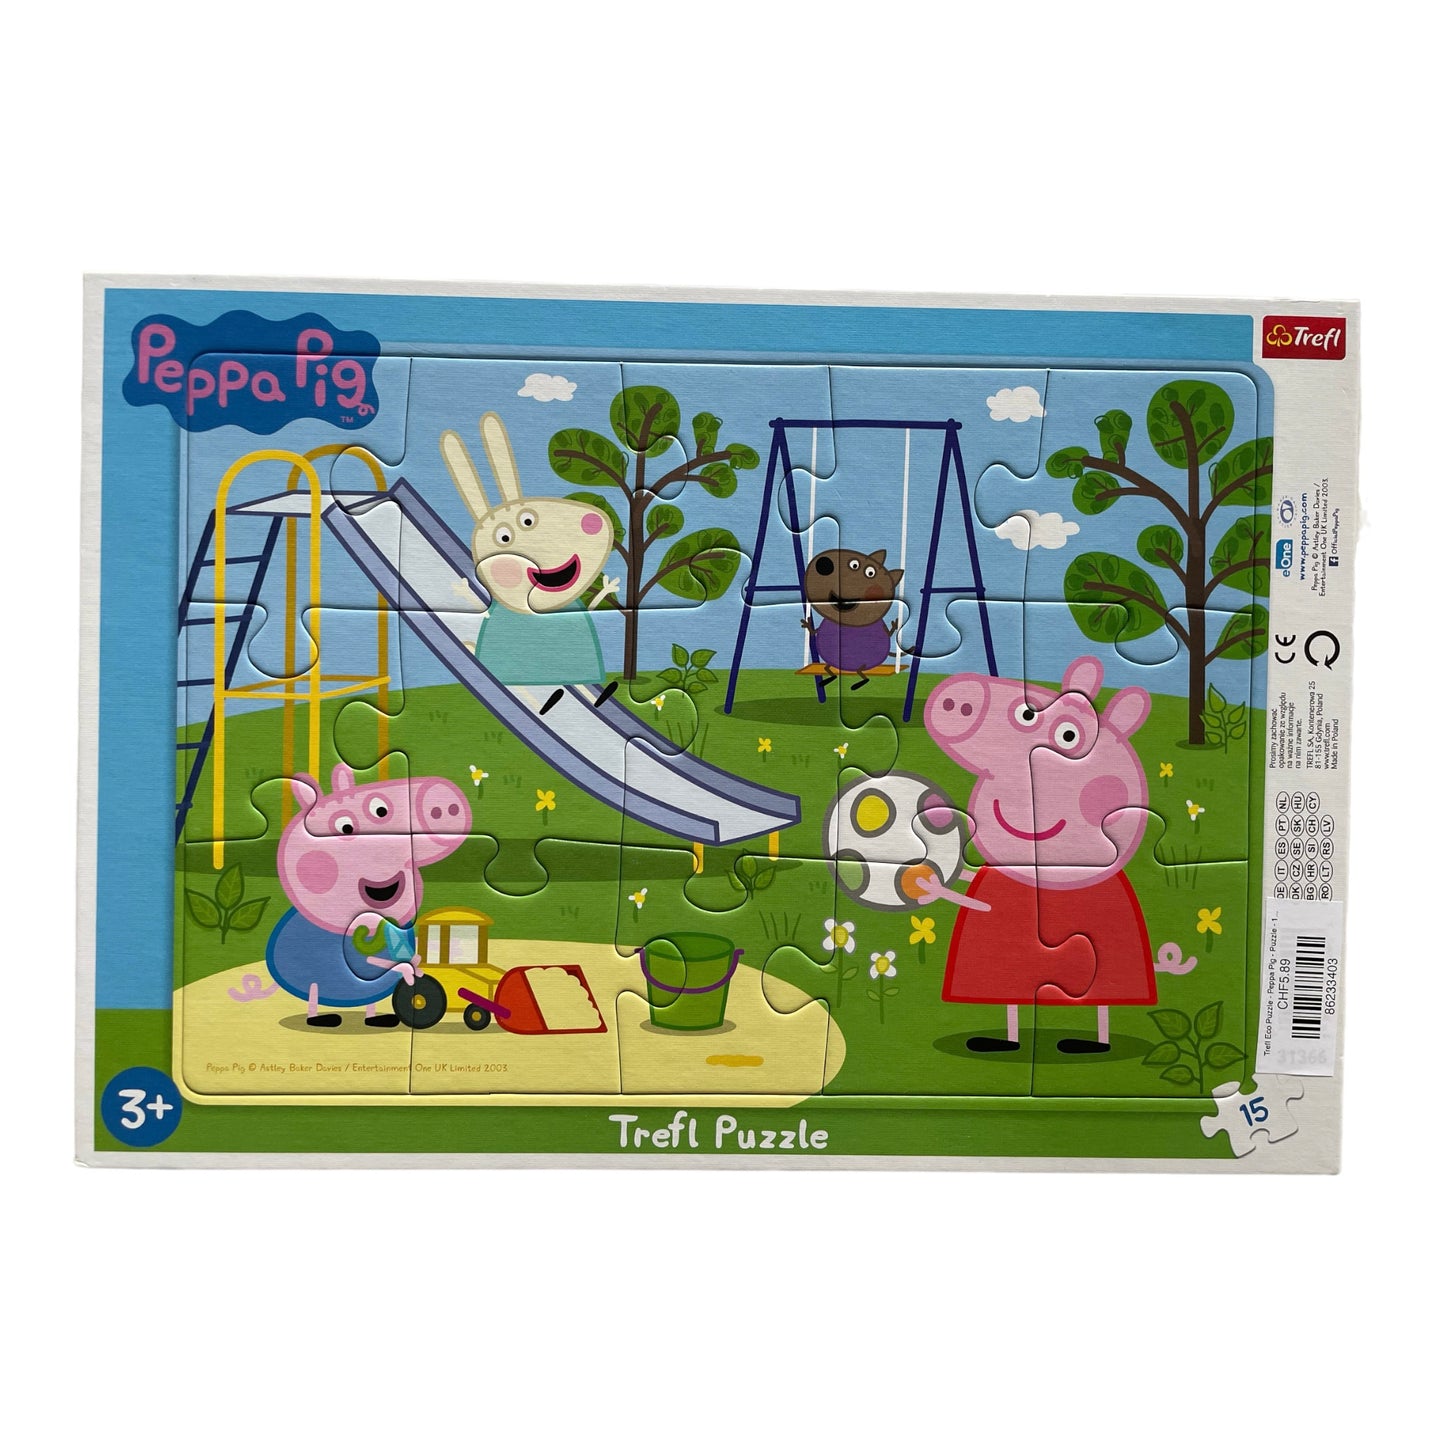 Trefl Eco Puzzle - Peppa Pig - Puzzle - 15 Pieces